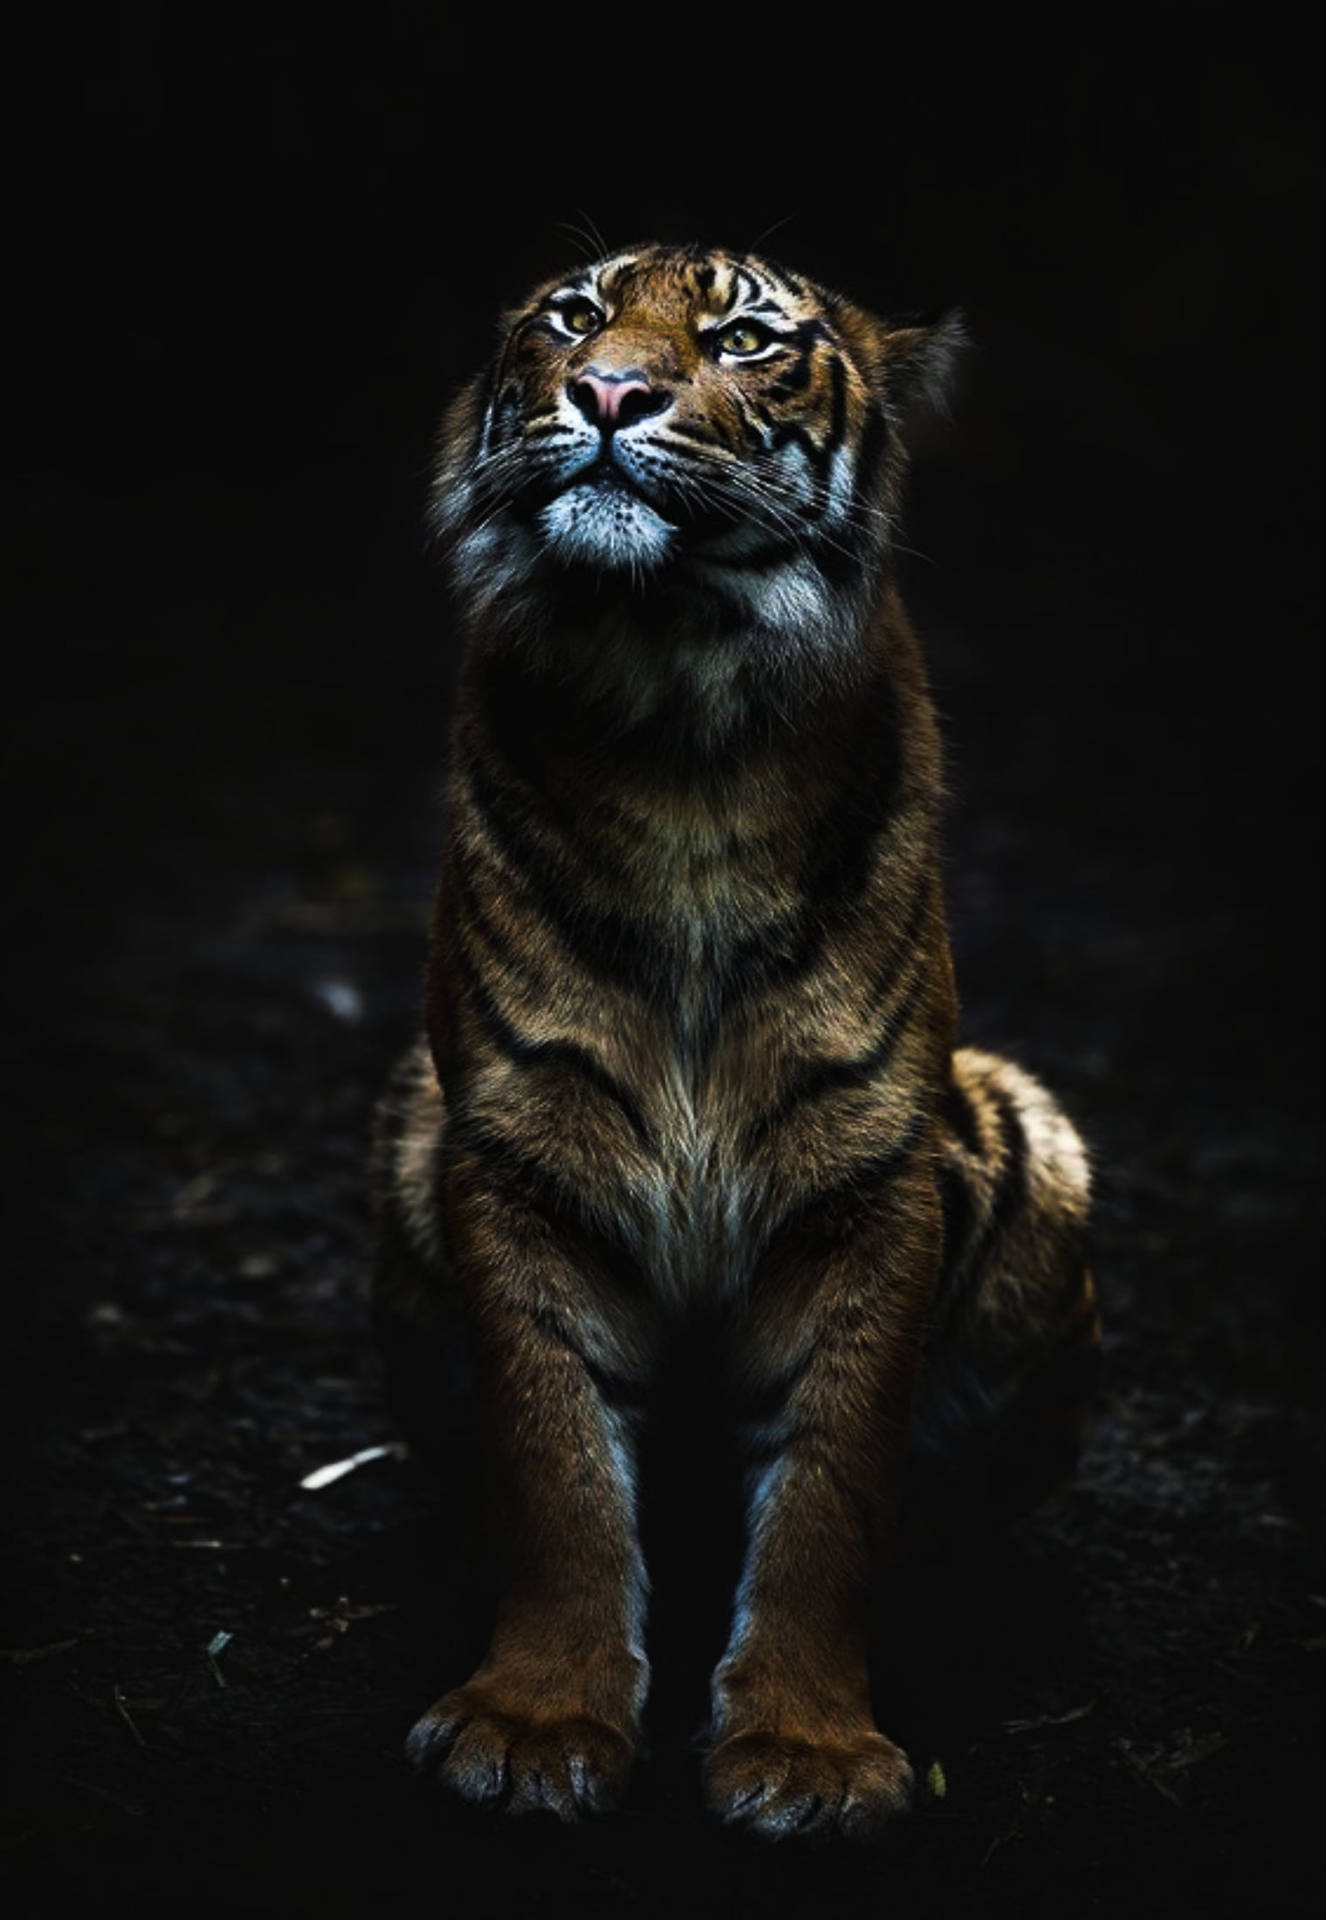 Black Tiger Sitting On Ground